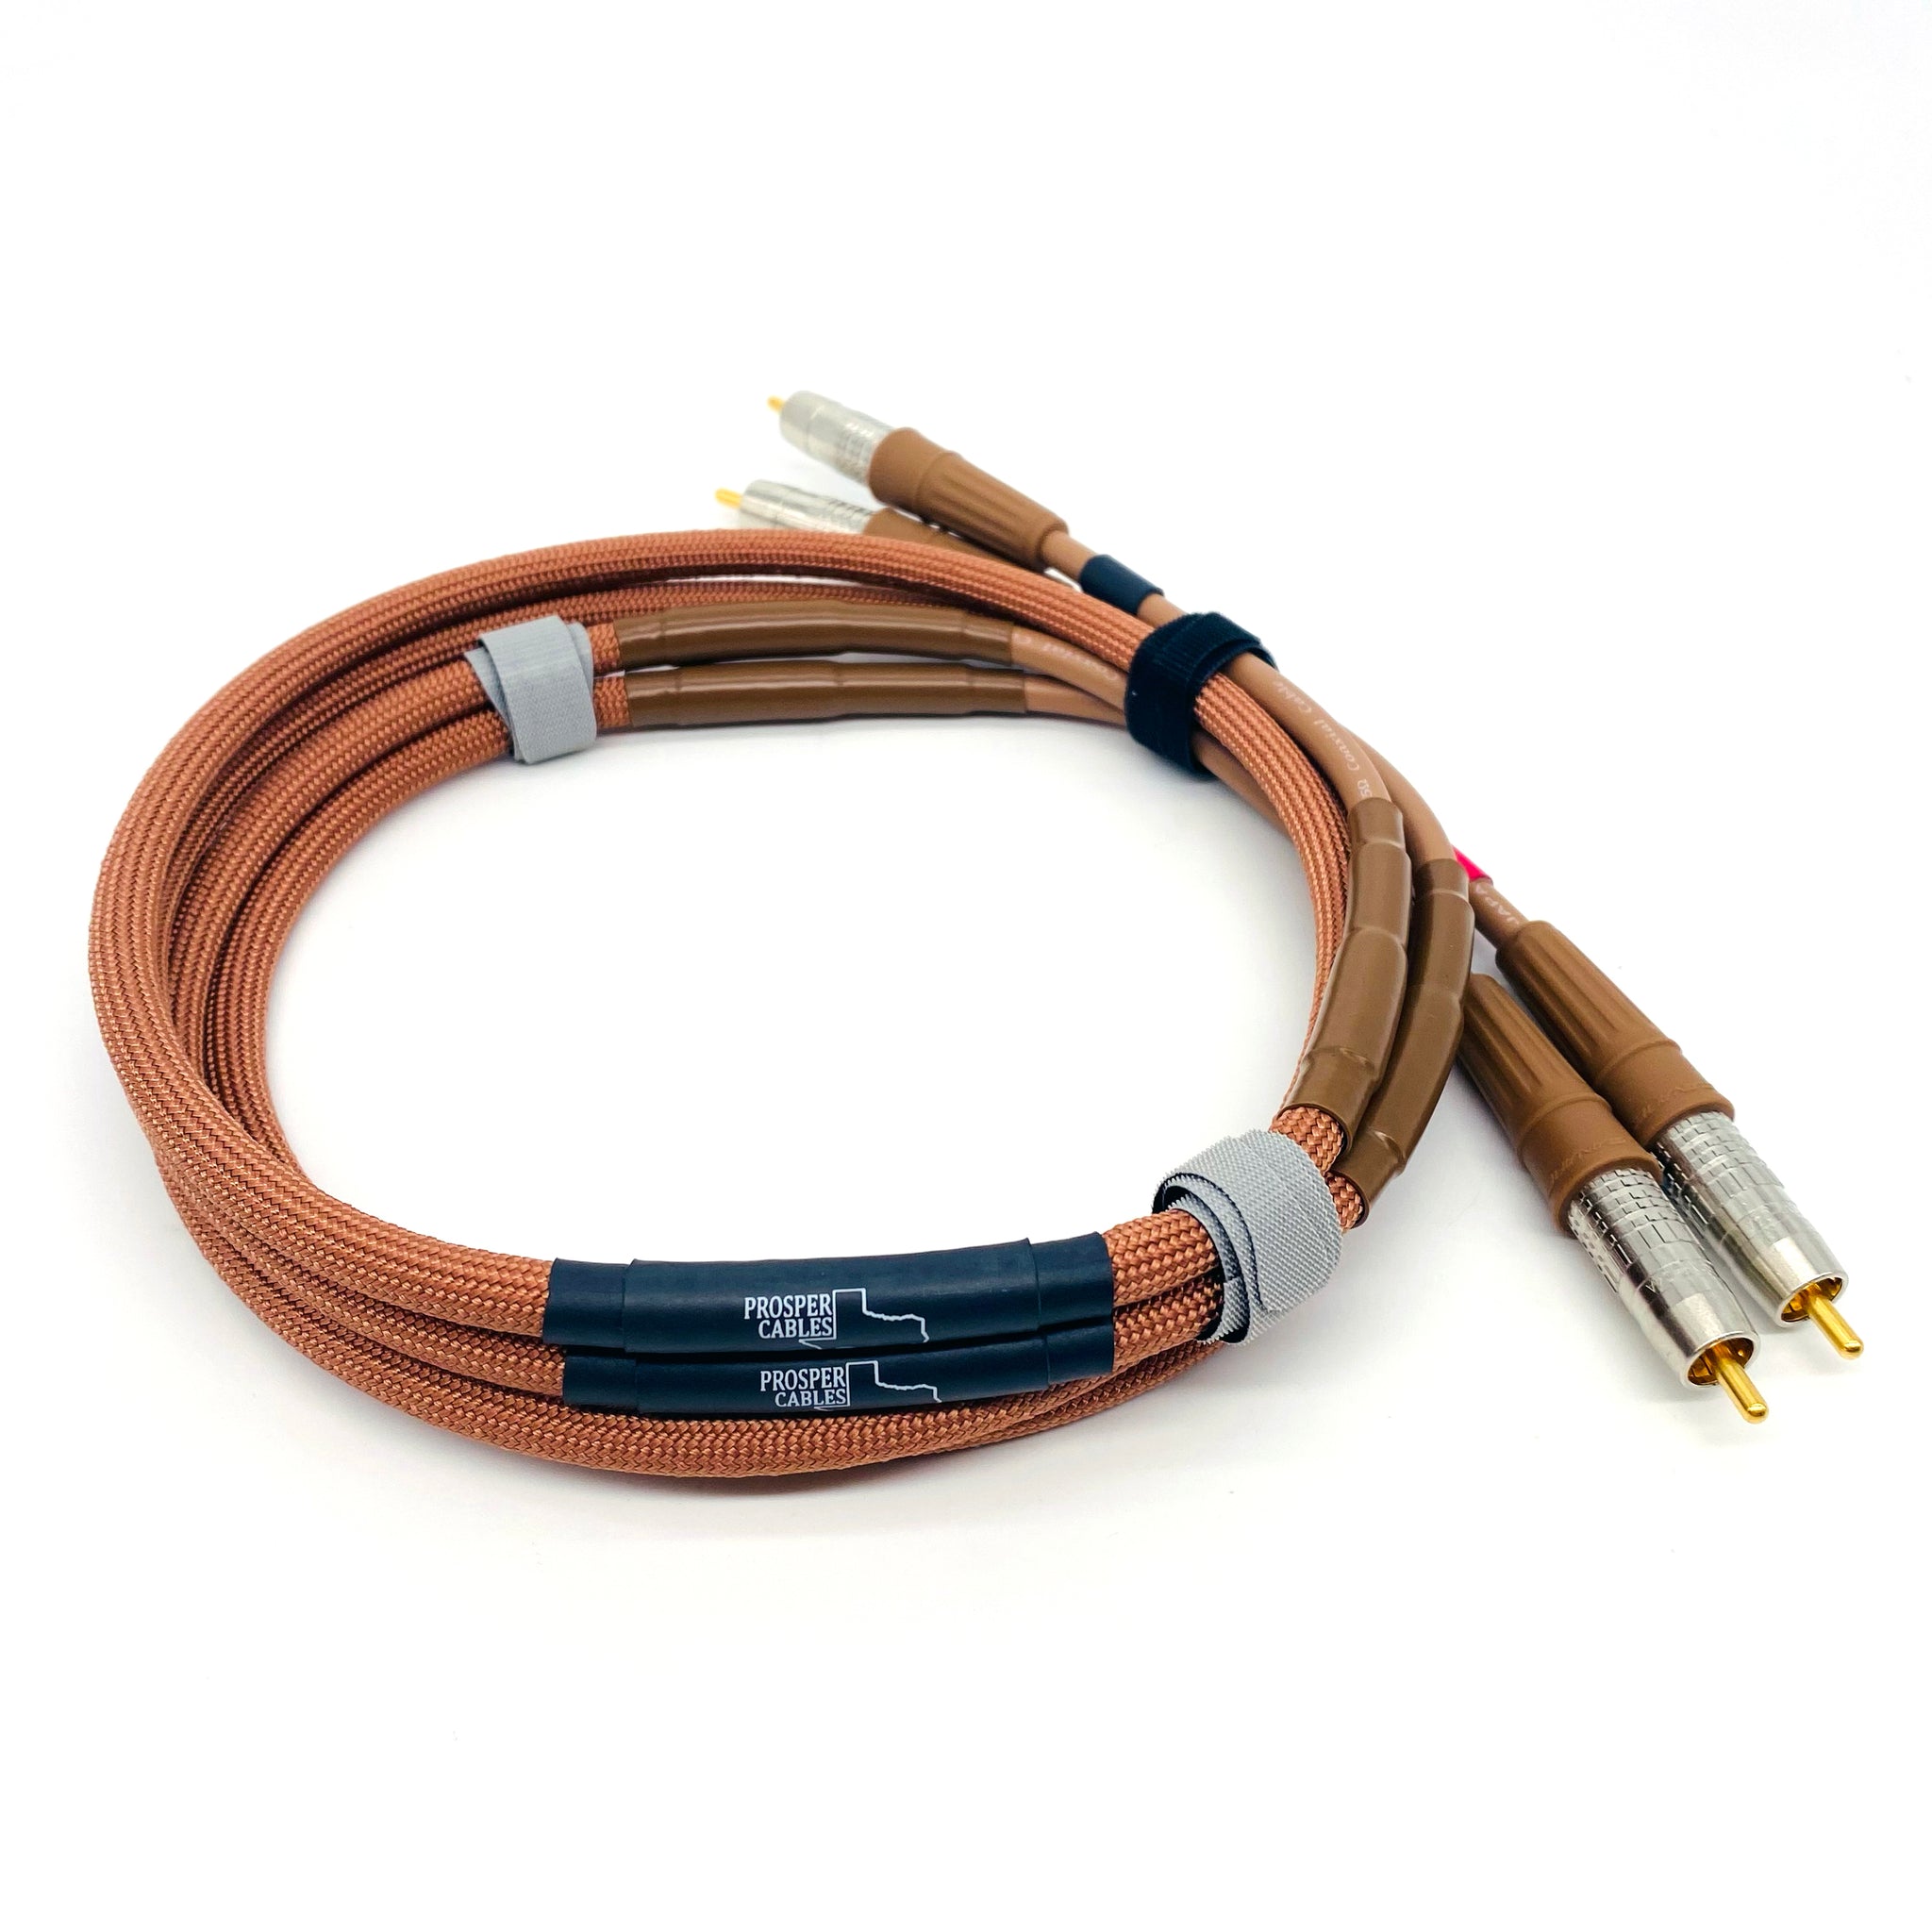 Prosper Interconnect Cables - Handmade in Prosper, Texas - 4ft Pair